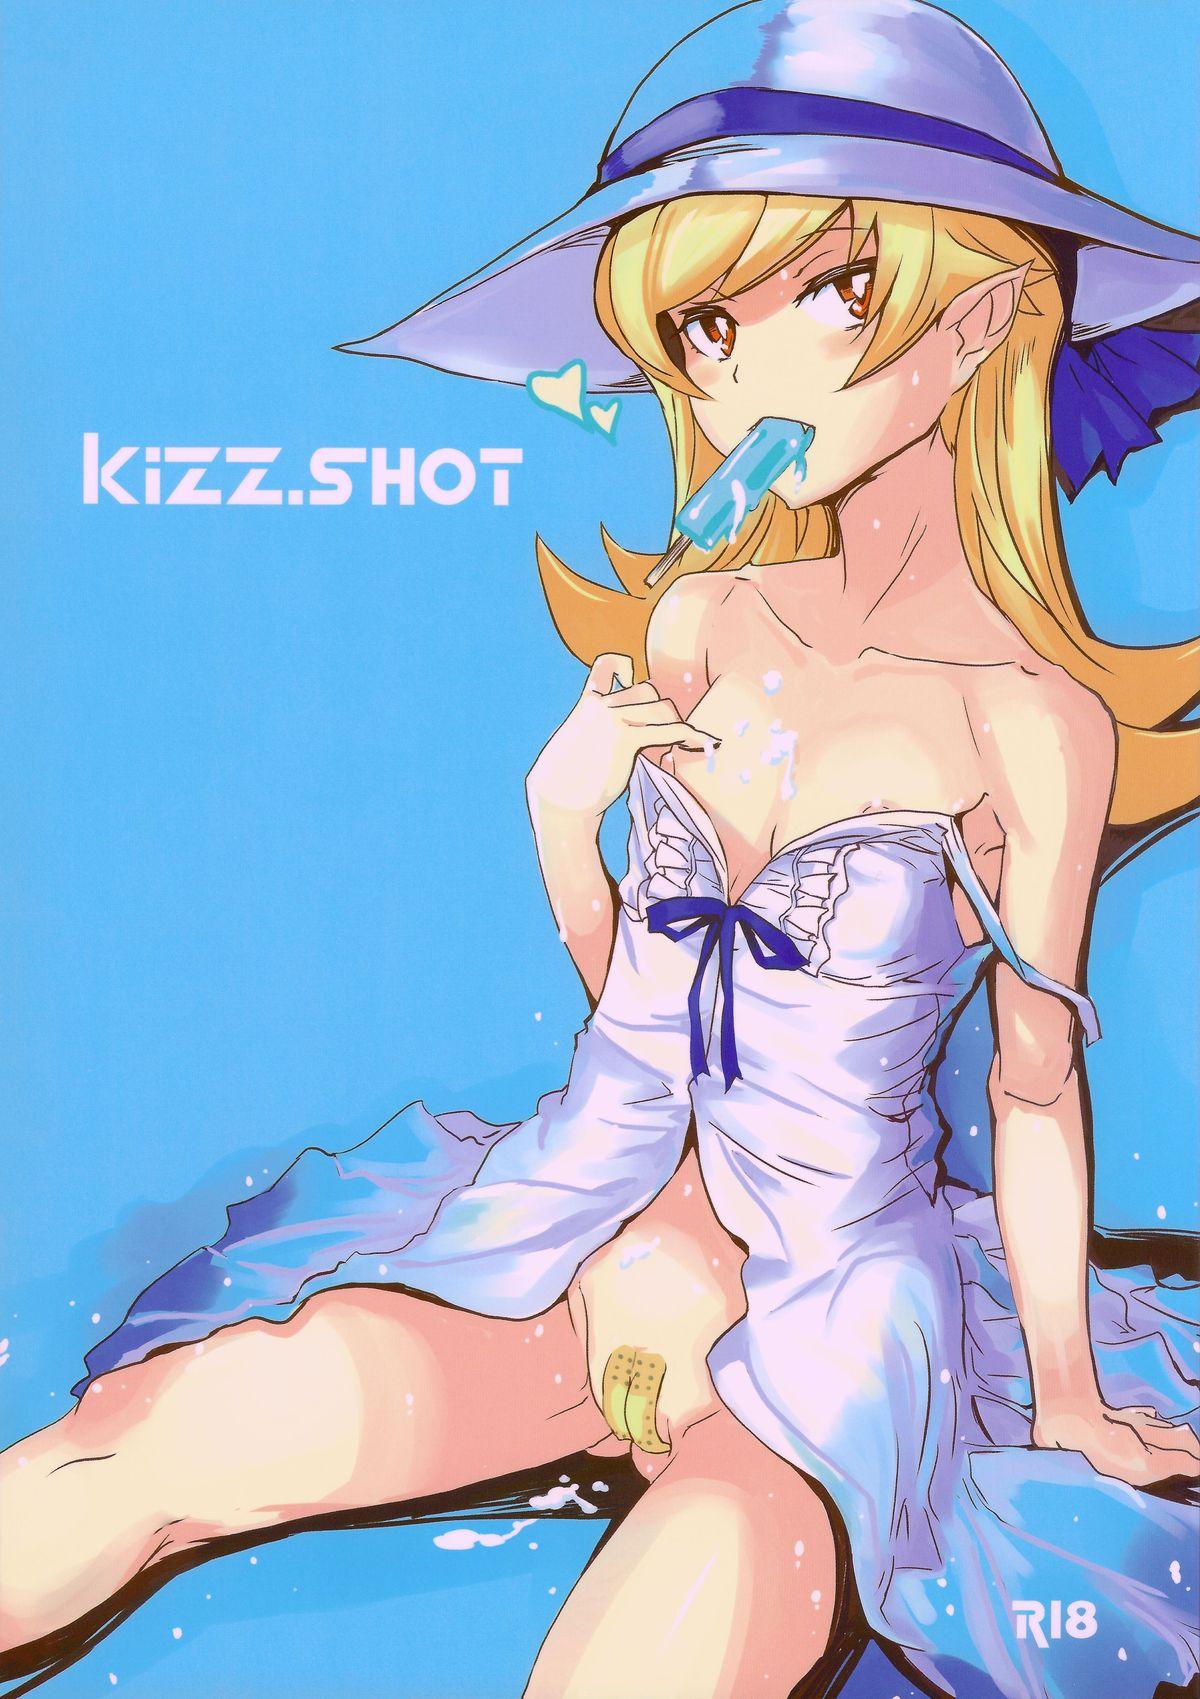 Follando kizz.SHOT - Bakemonogatari Girlfriend - Picture 1